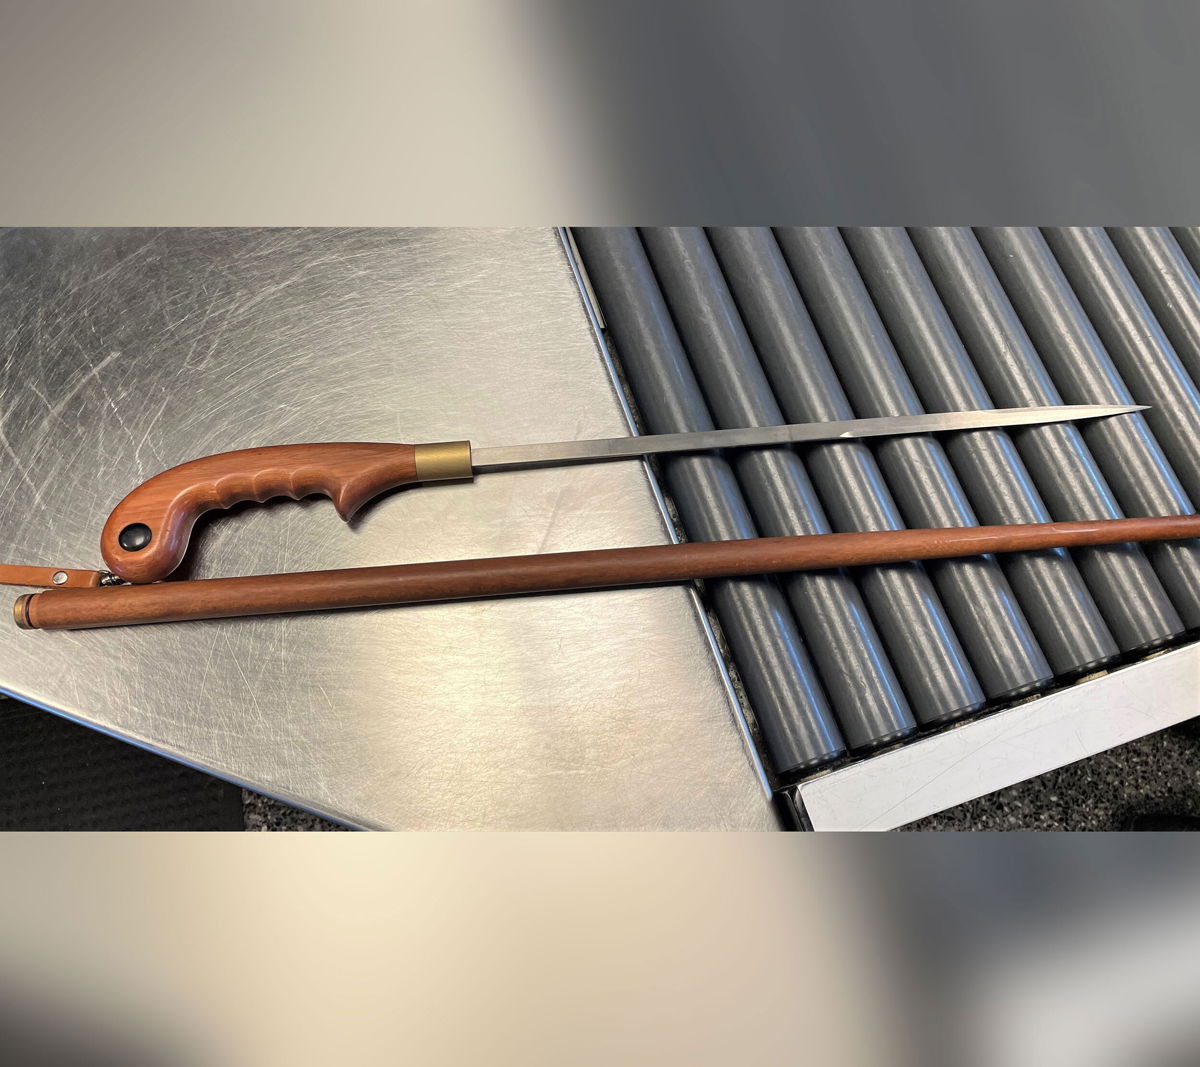 <i>From TSA New England/Twitter</i><br/>TSA officers at Boston's Logan International Airport discovered a long blade seemingly hidden inside a traveler's cane.